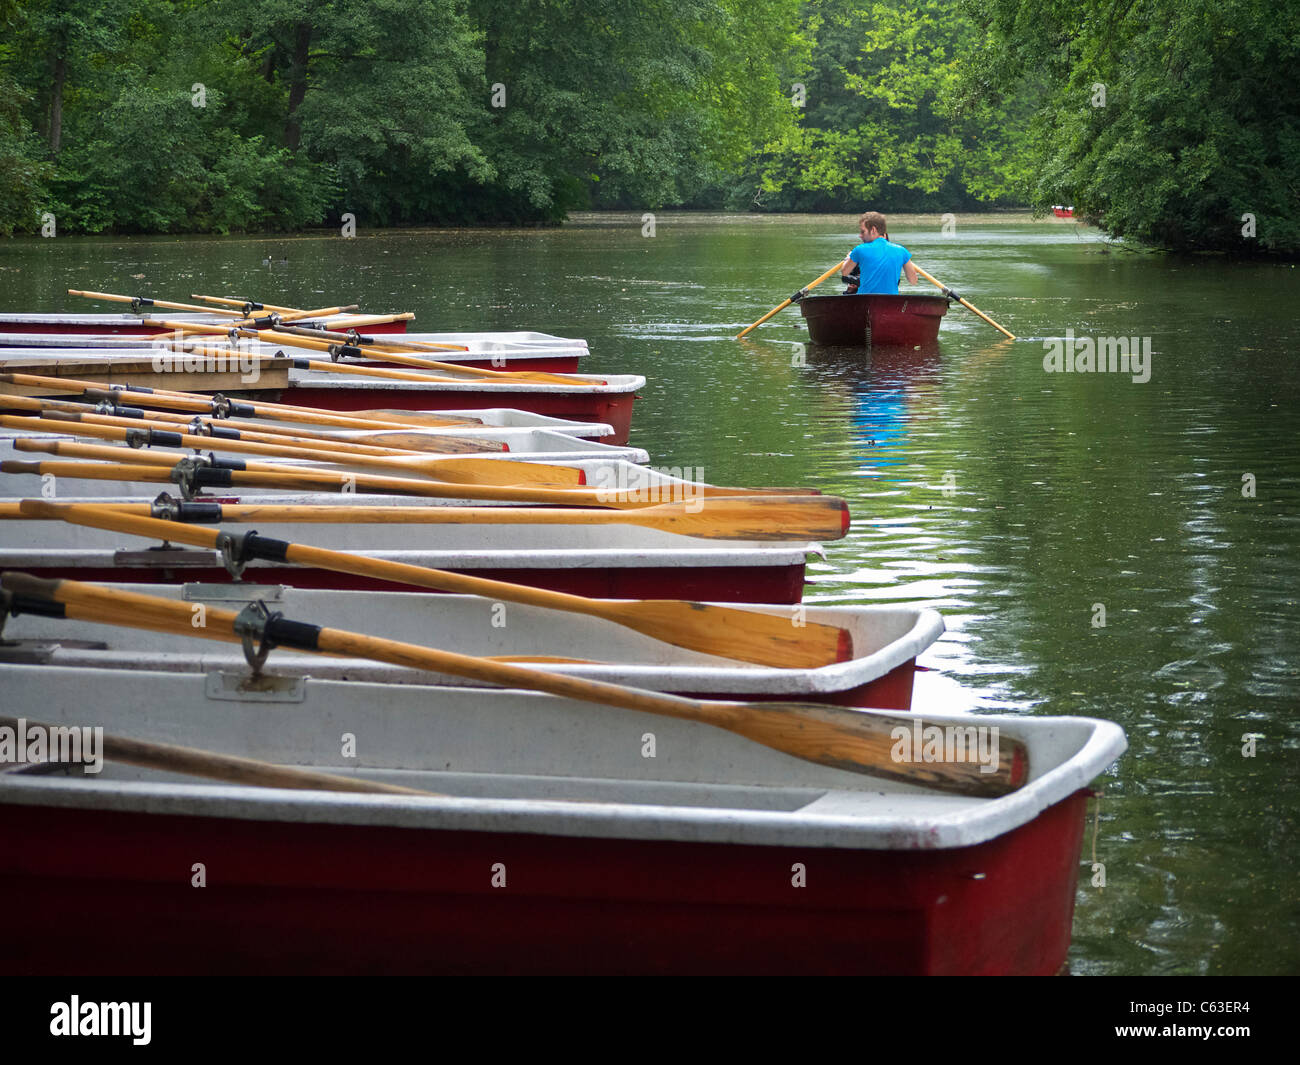 People rowing boats in lake at Tiergarten park in Berlin Germany Stock Photo